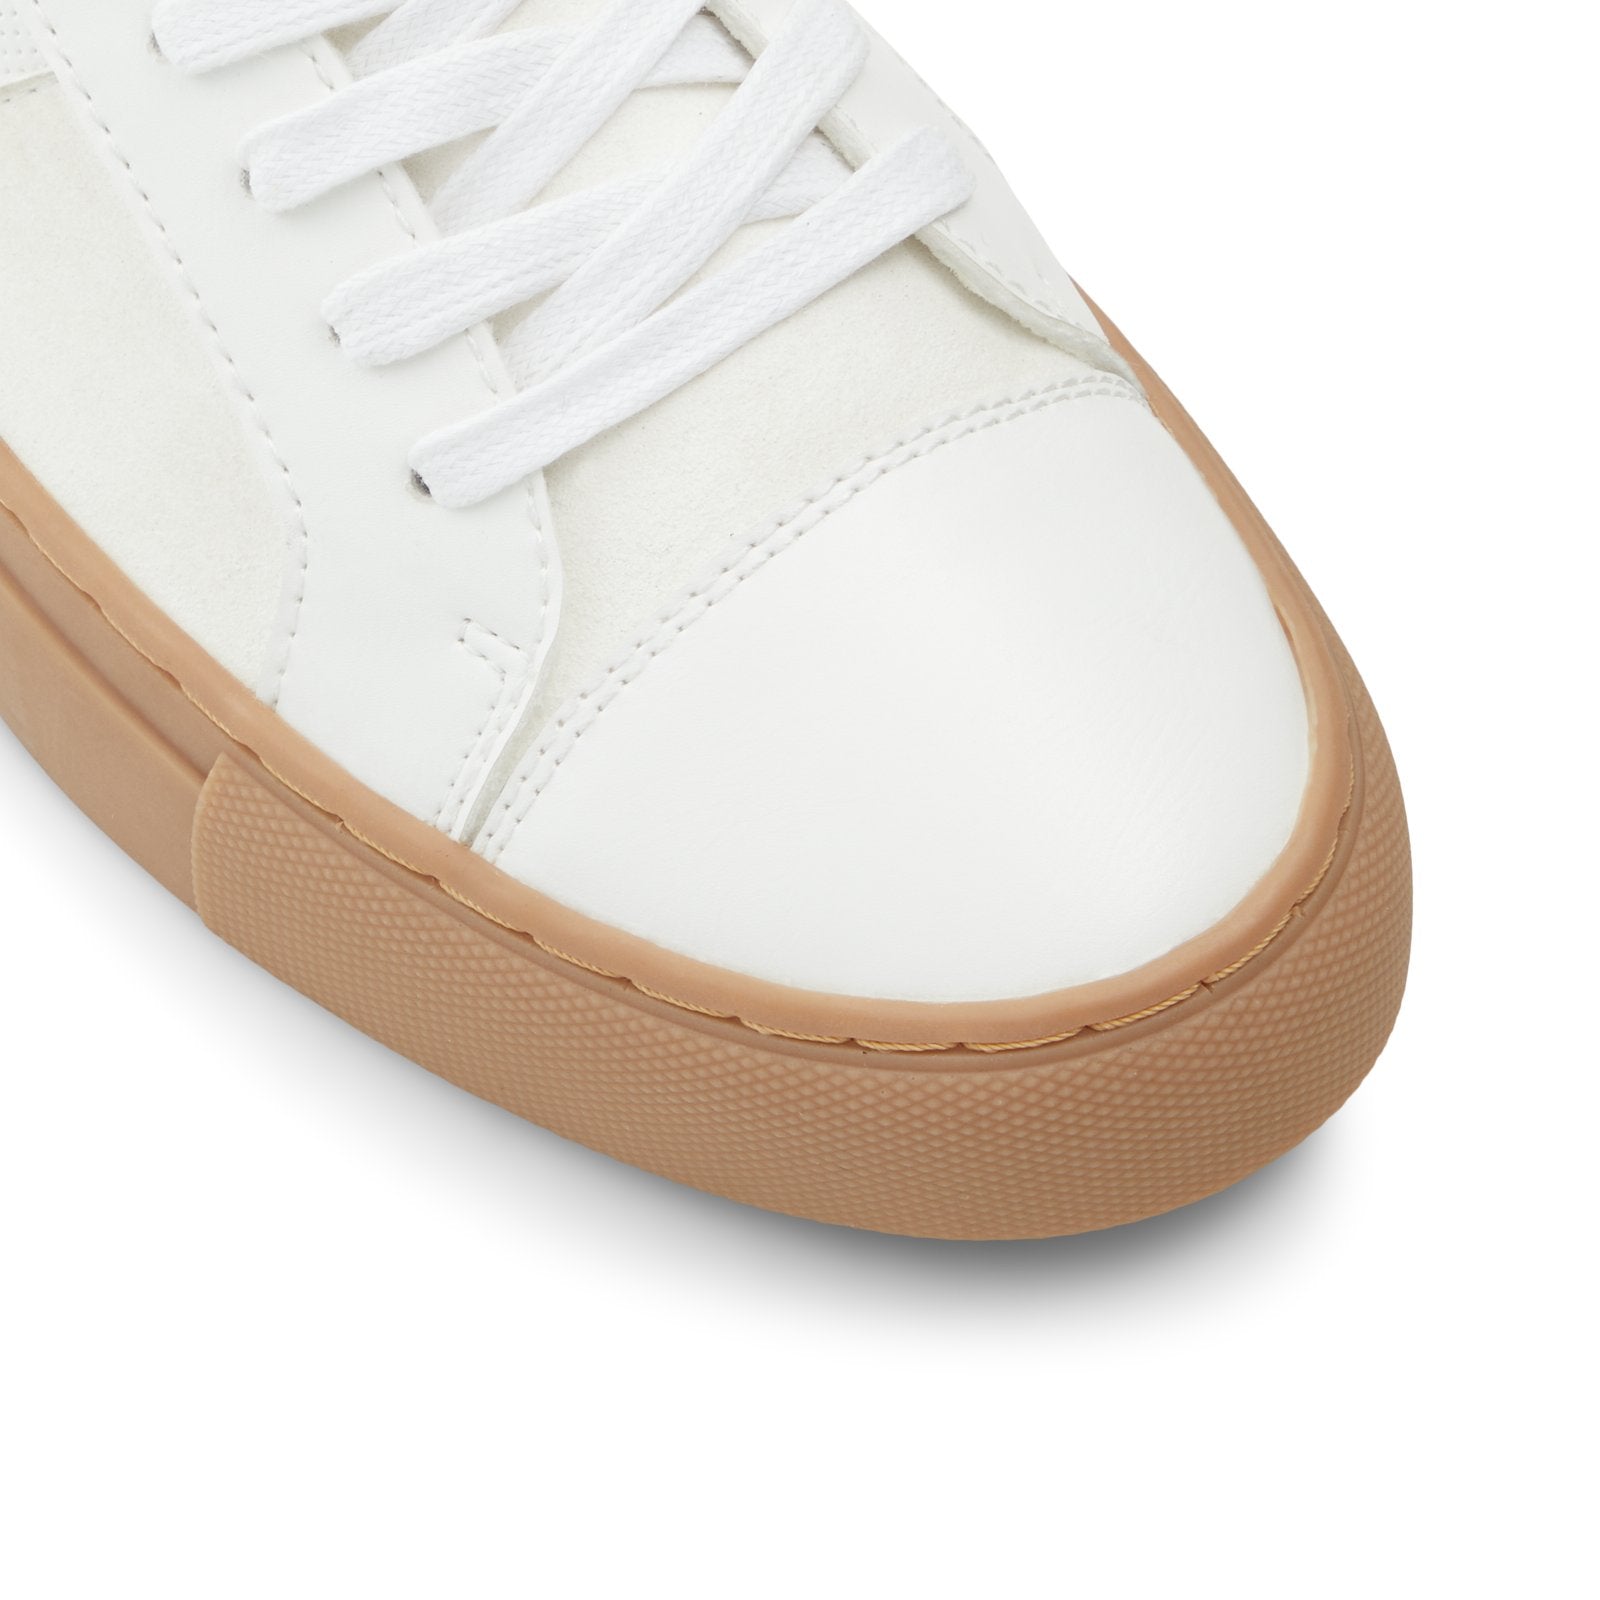 Conner Men Shoes - White - CALL IT SPRING KSA